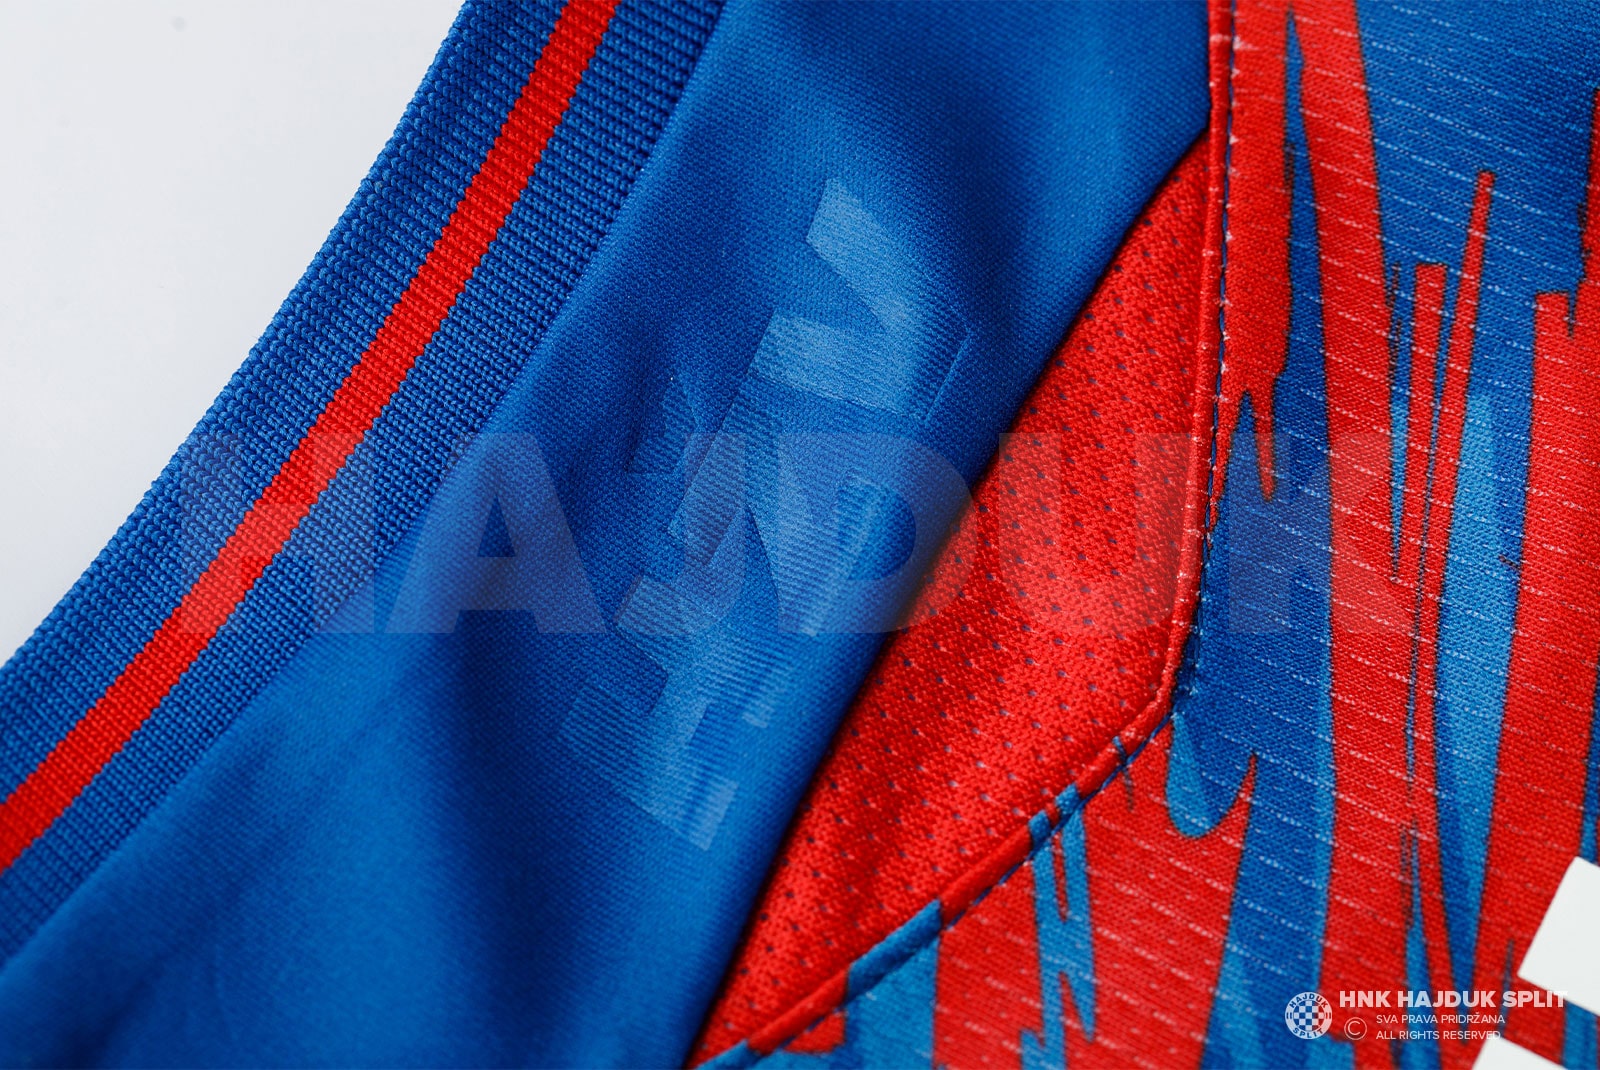 Red & Blue with a broken effect in the new Hajduk Split away kit by Macron!